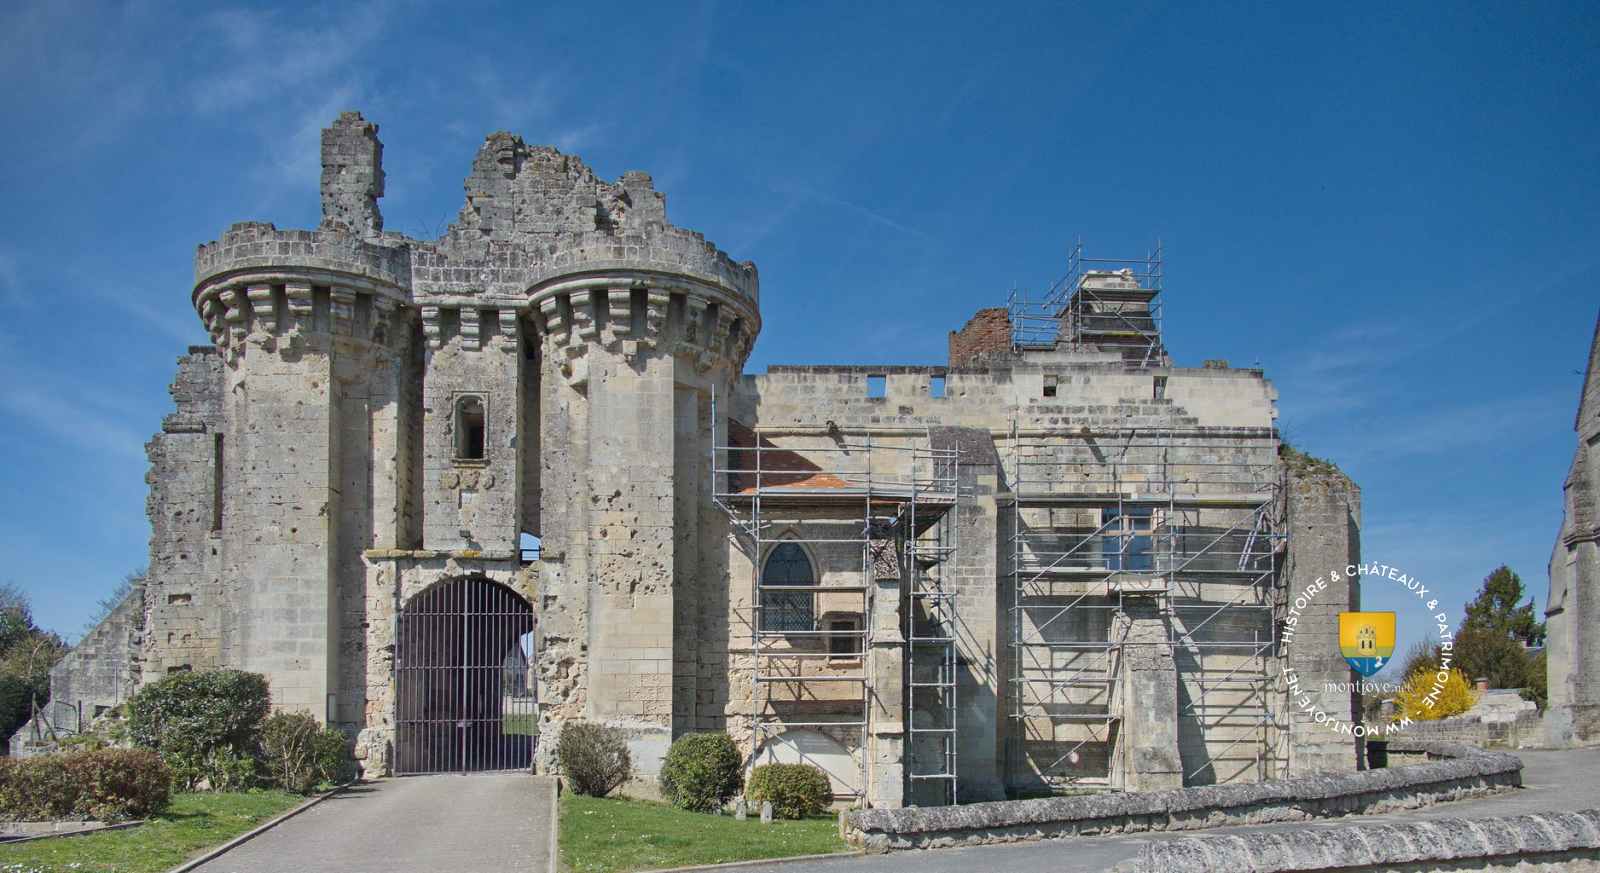 Château de Berzy-le-Sec